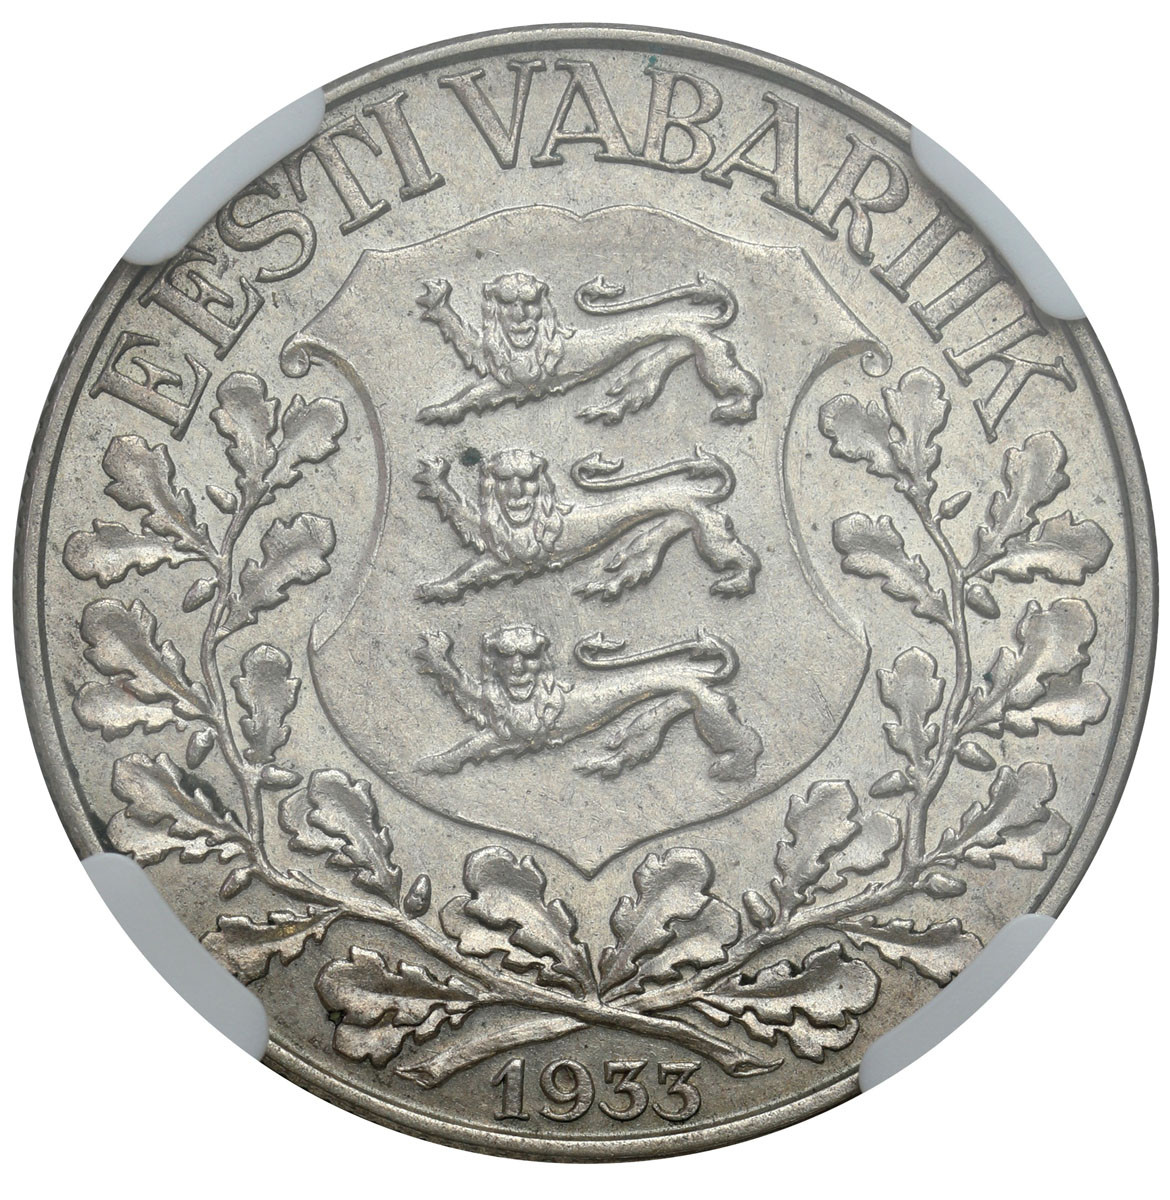 Estonia. 1 kroon (korona) 1933, Lira – NGC AU58